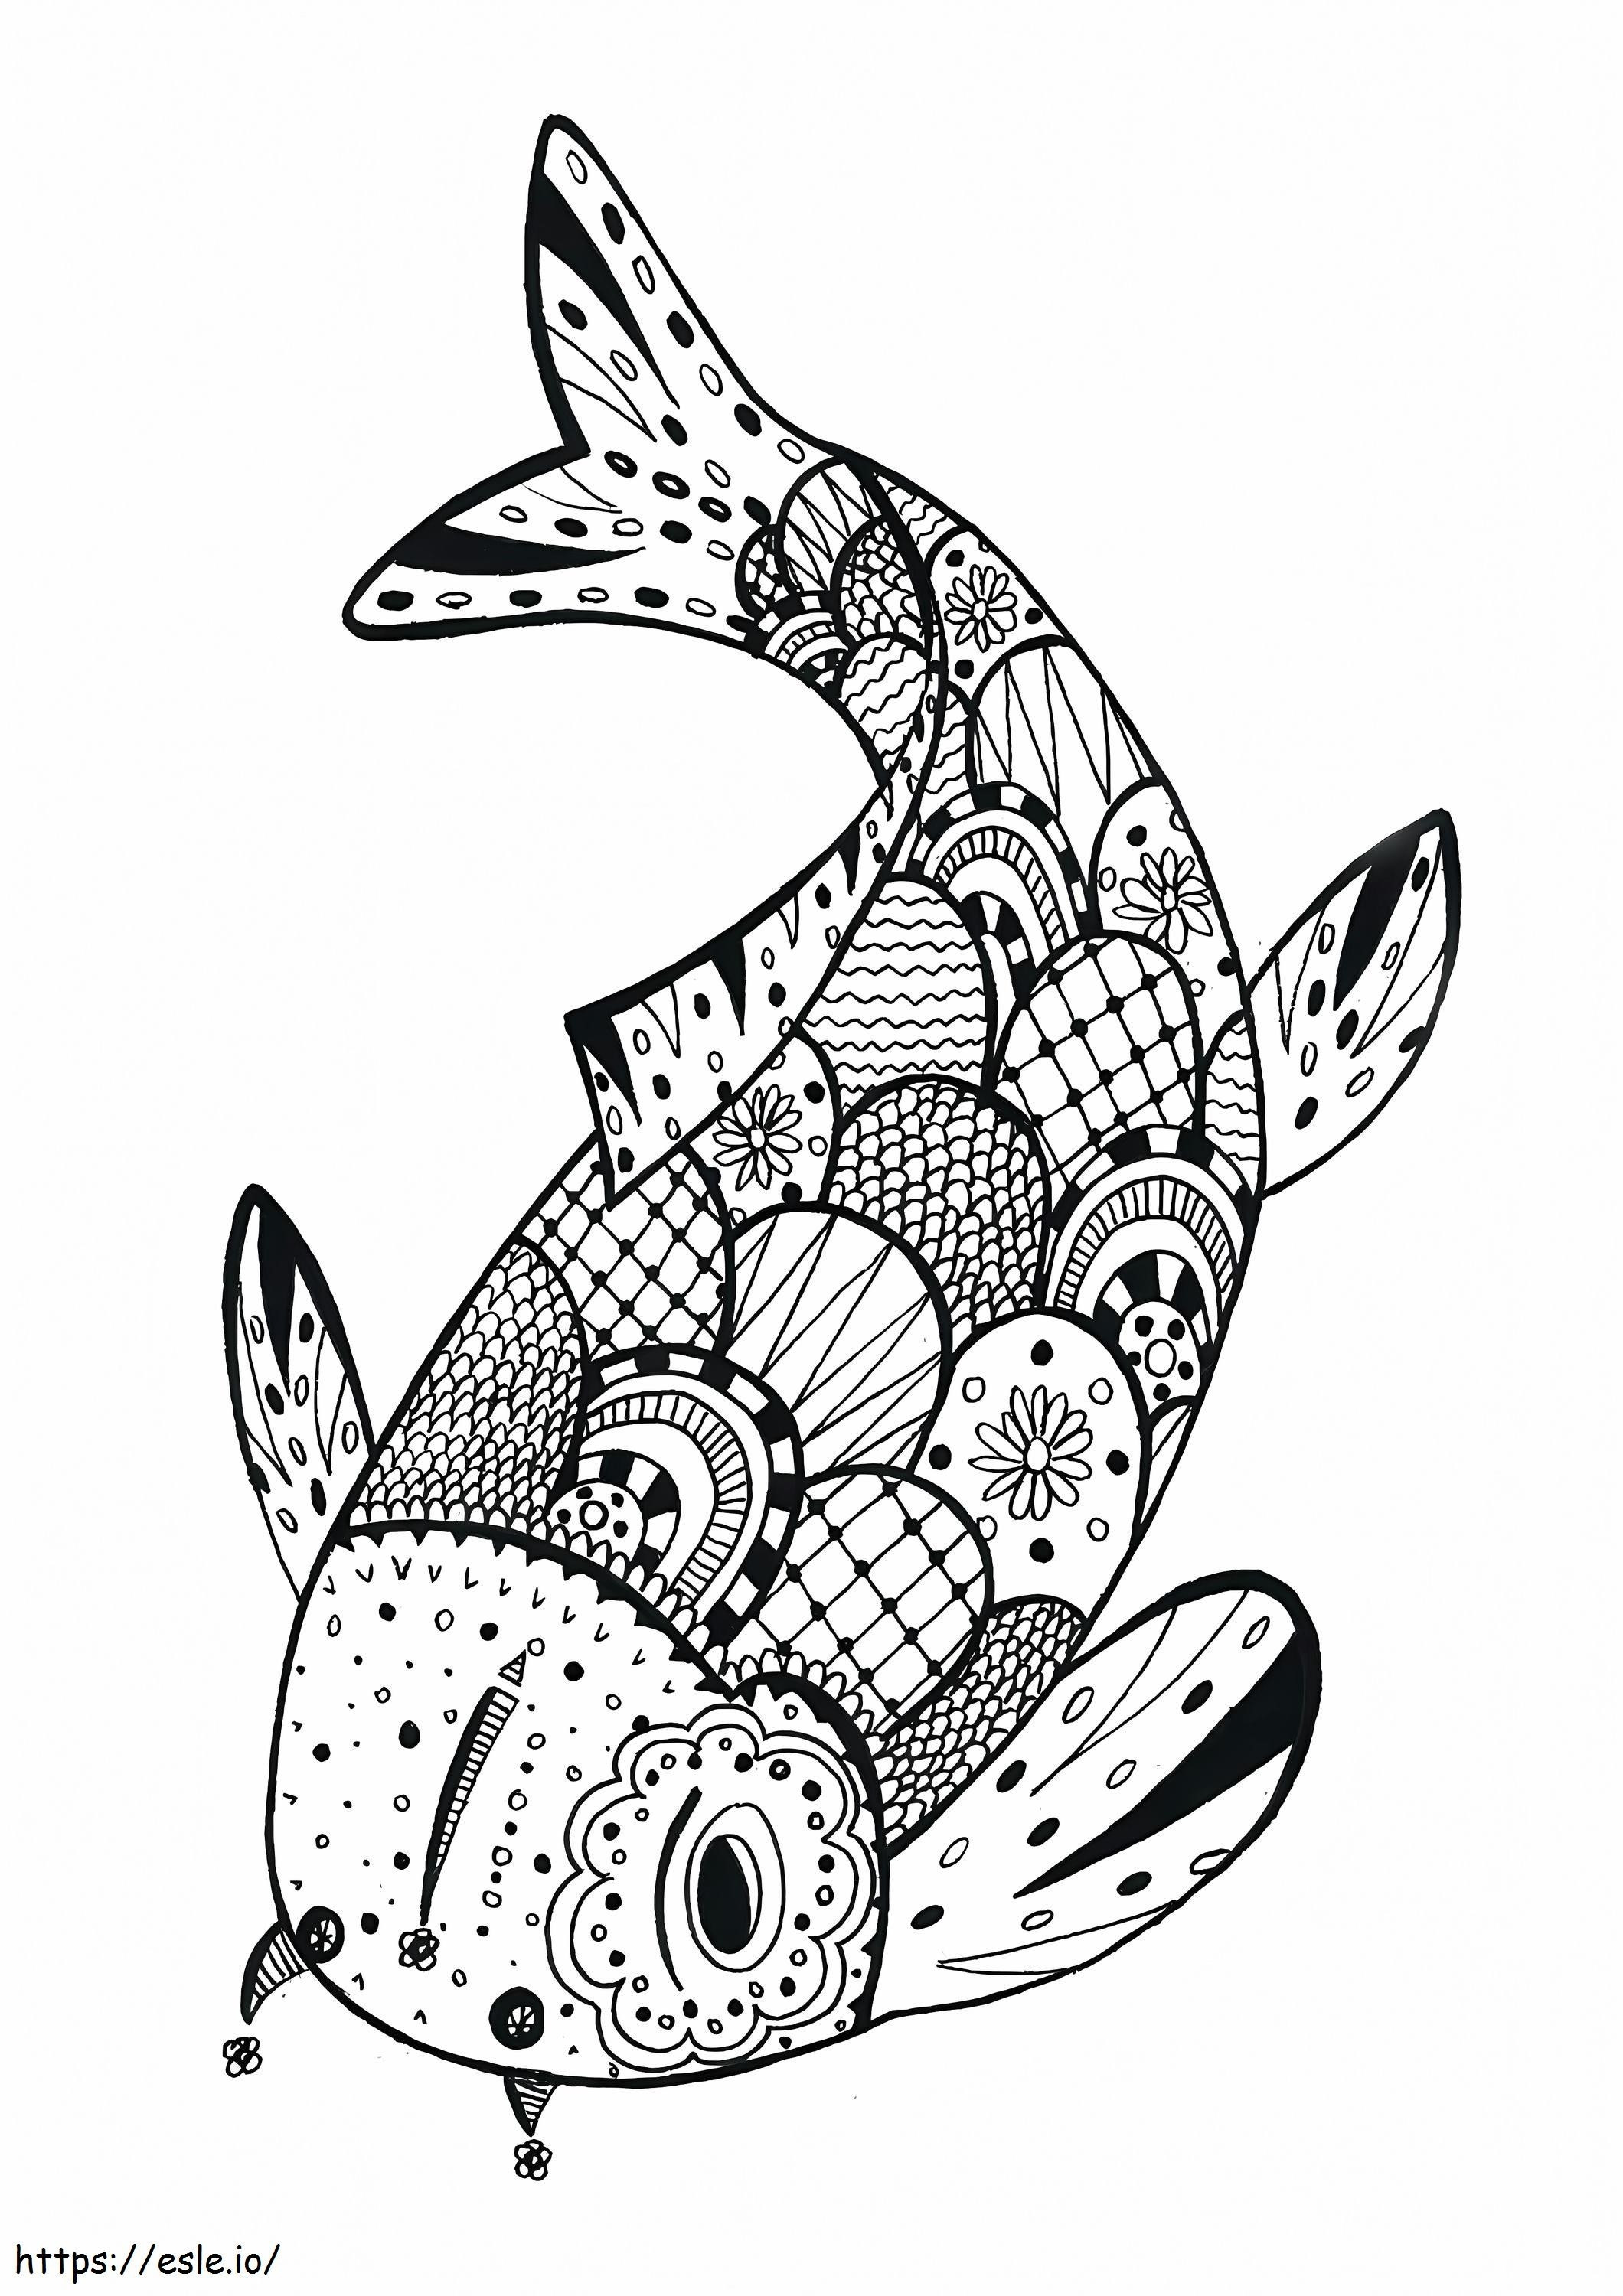 Cool Koi Fish coloring page